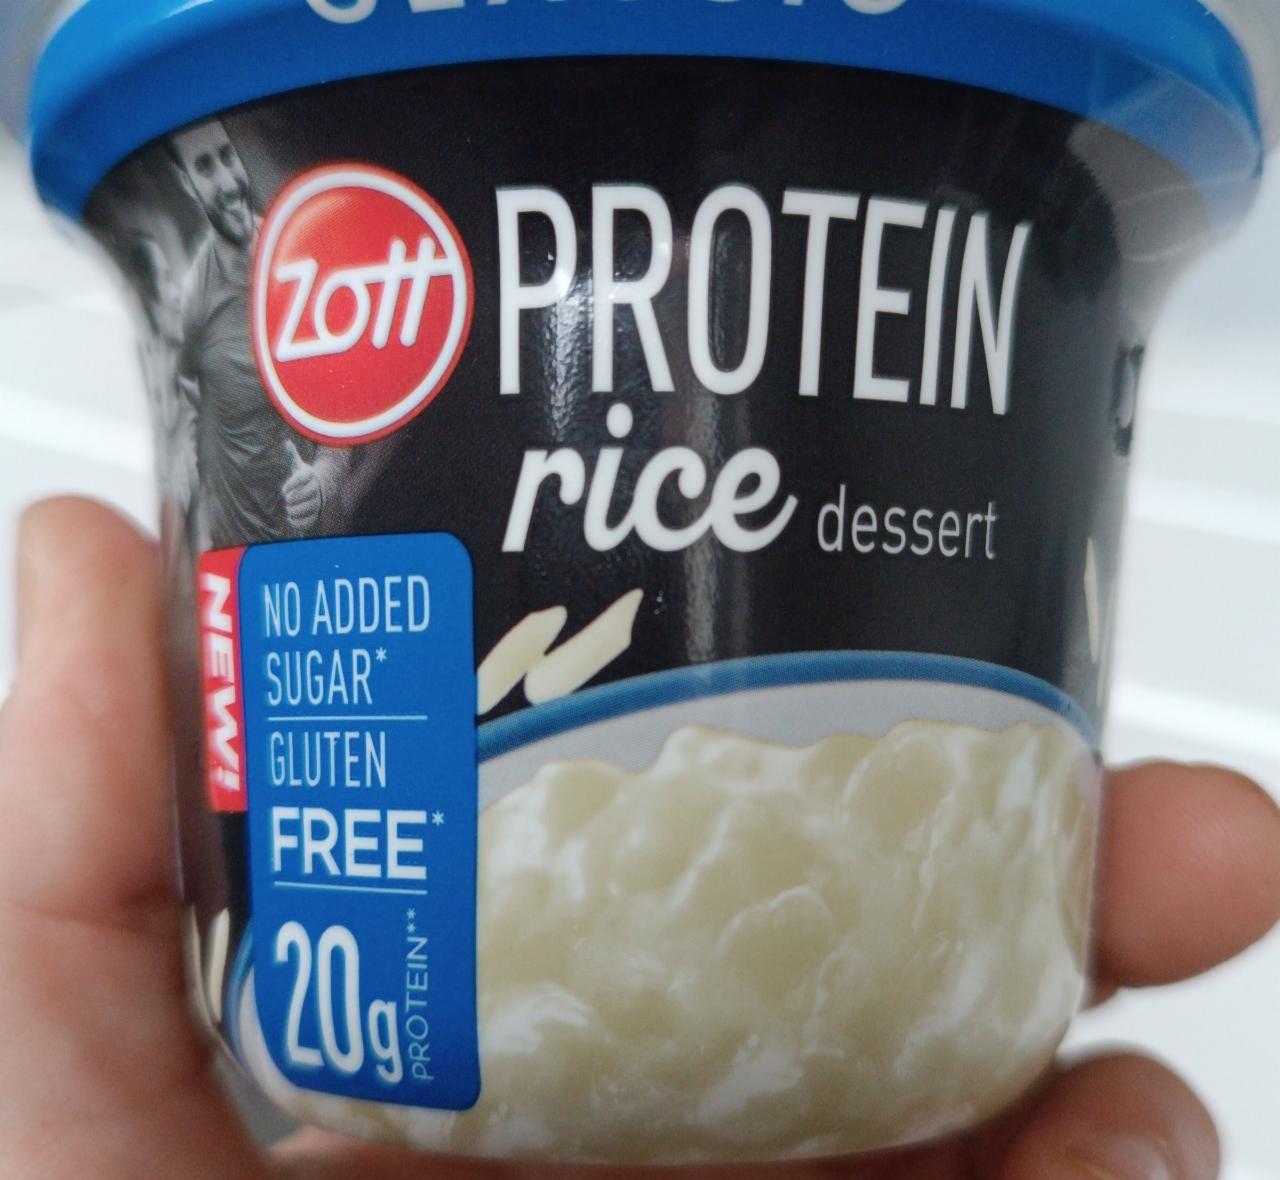 Фото - Protein rice dessert Zott